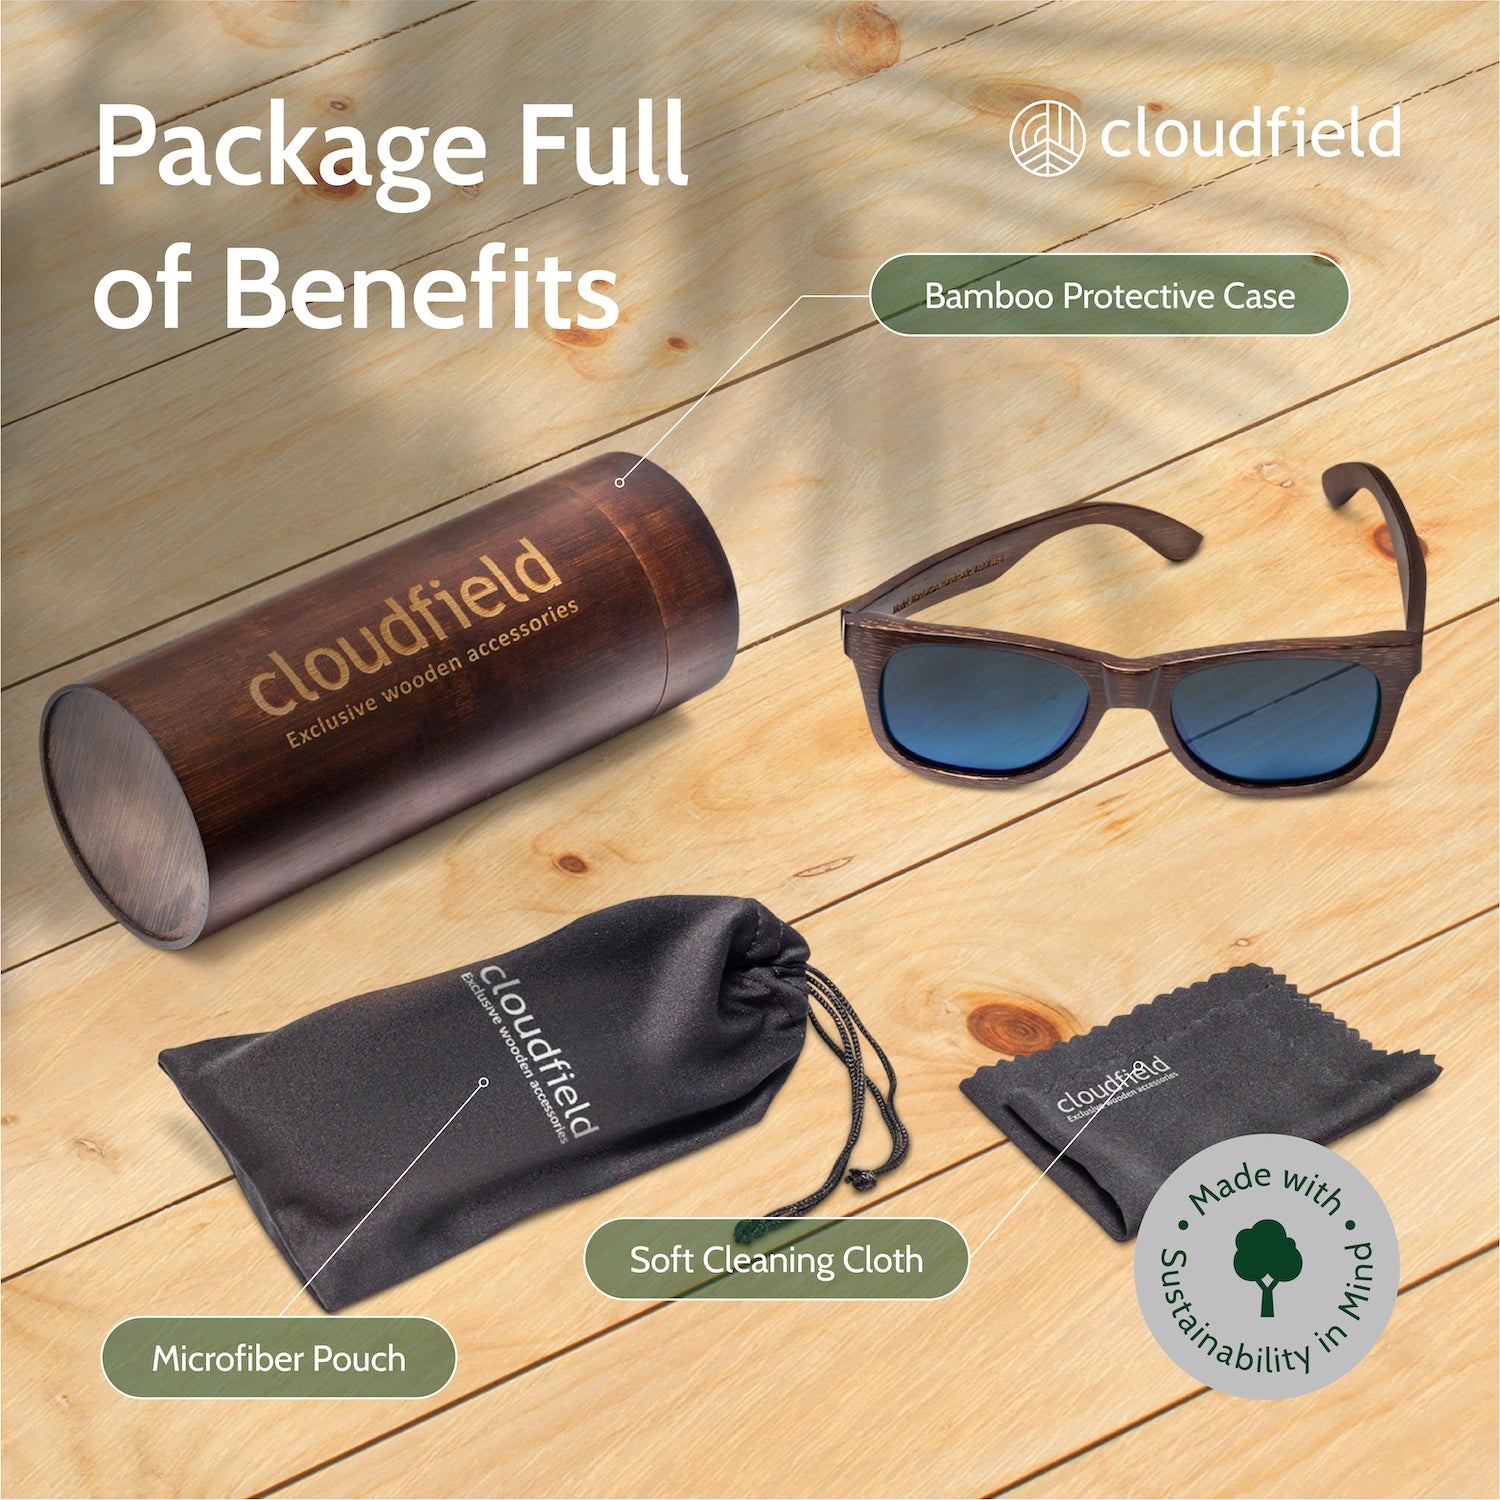 Cloudfield Unisex Polarized Wood Sunglasses - Blue